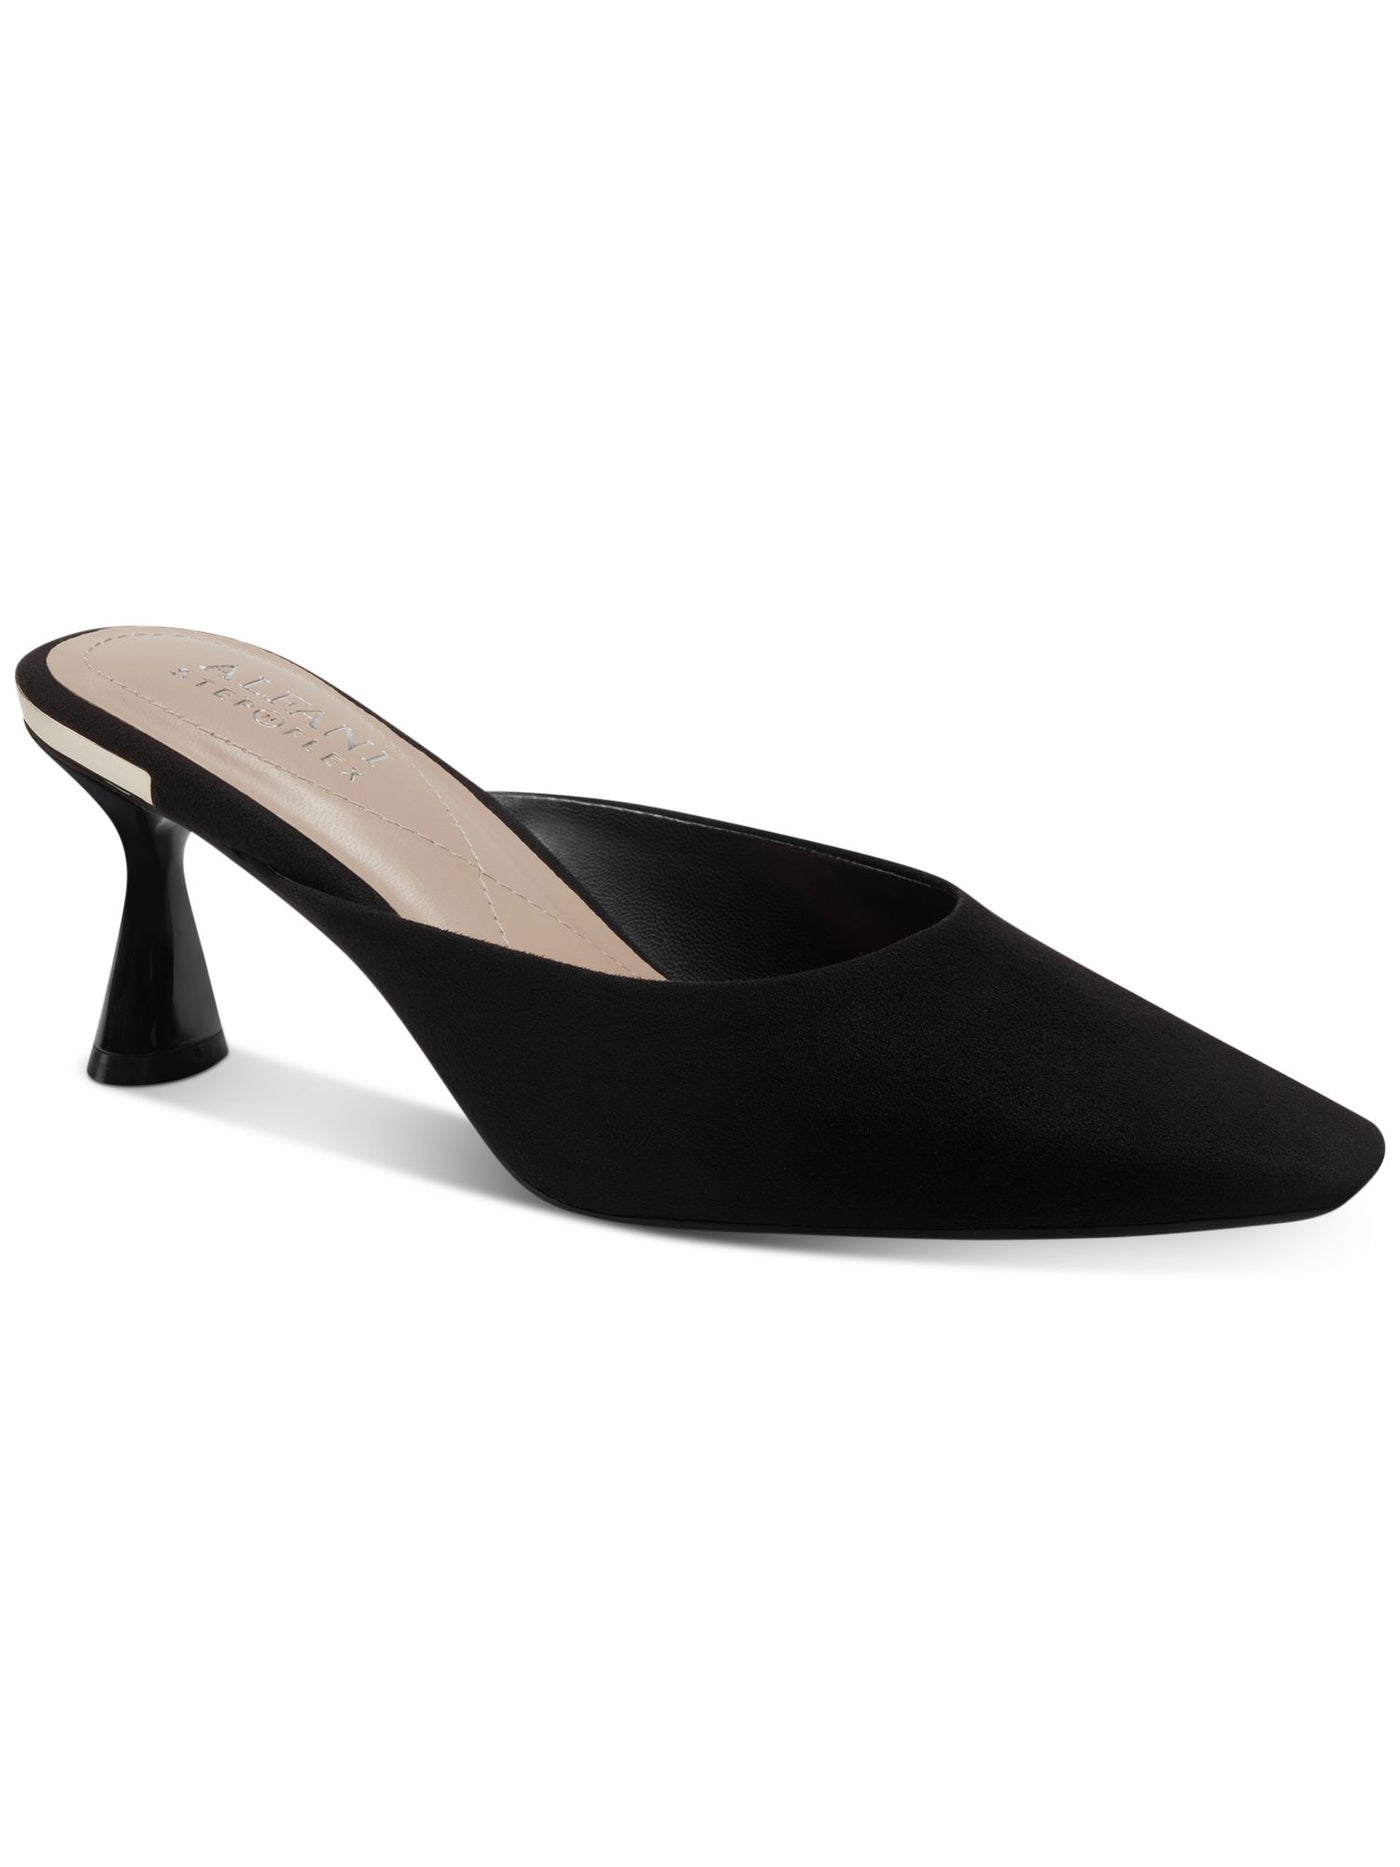 ALFANI Womens Black Padded Cecilia Square Toe Kitten Heel Slip On Dress Heeled Mules Shoes 5.5 M